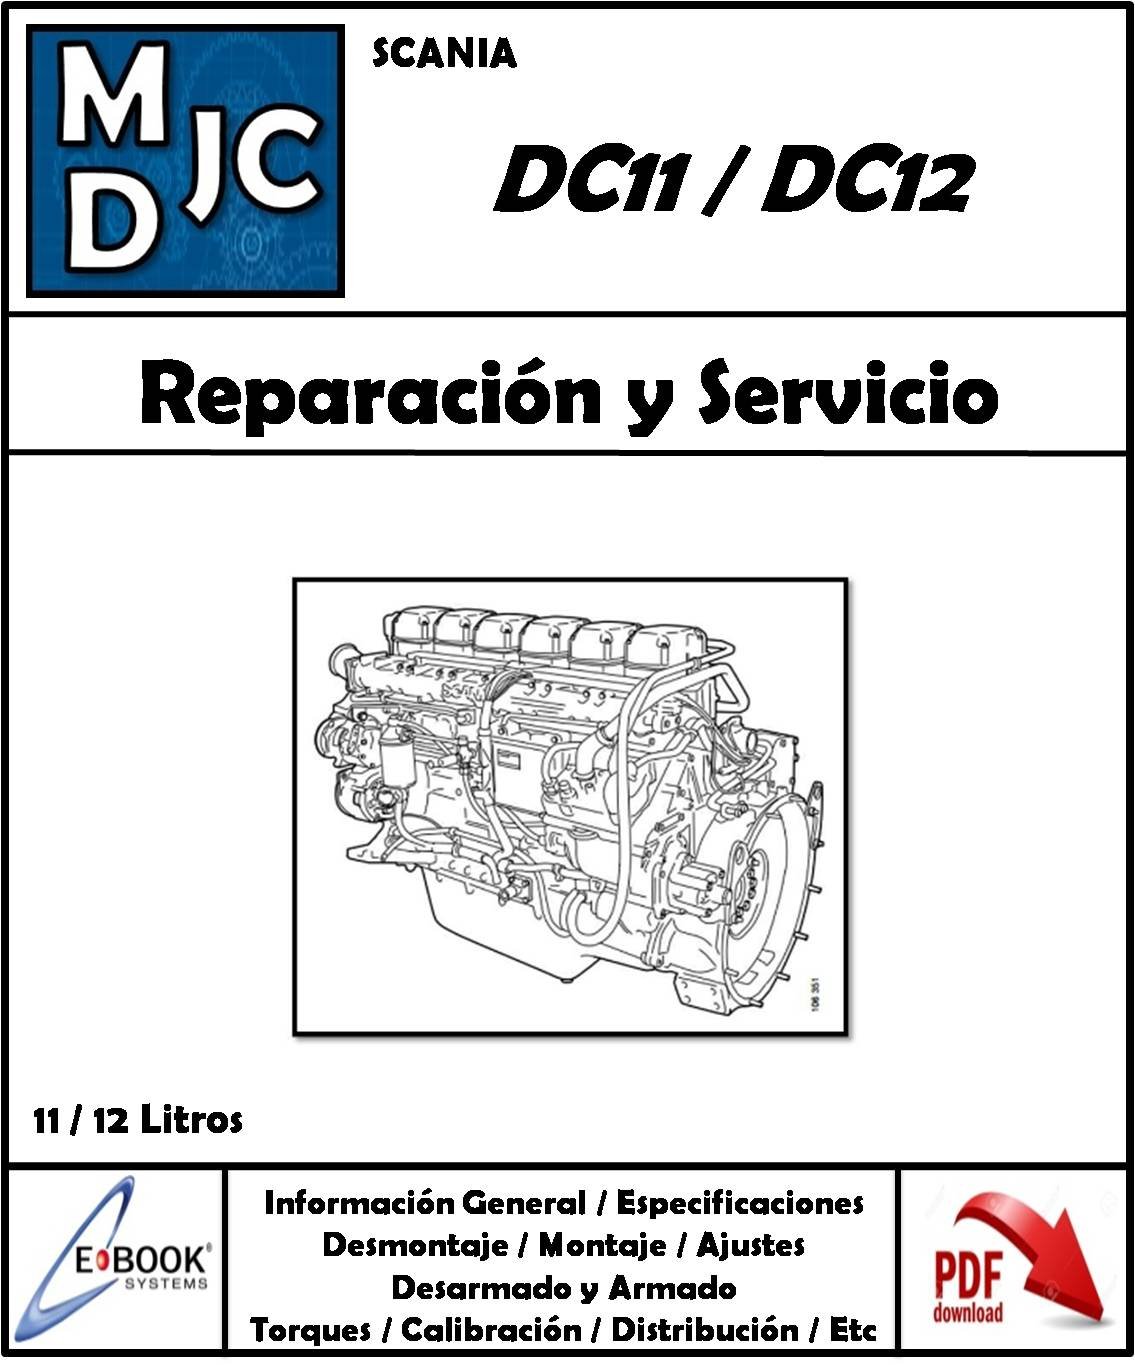 Scania DC11 / DC12